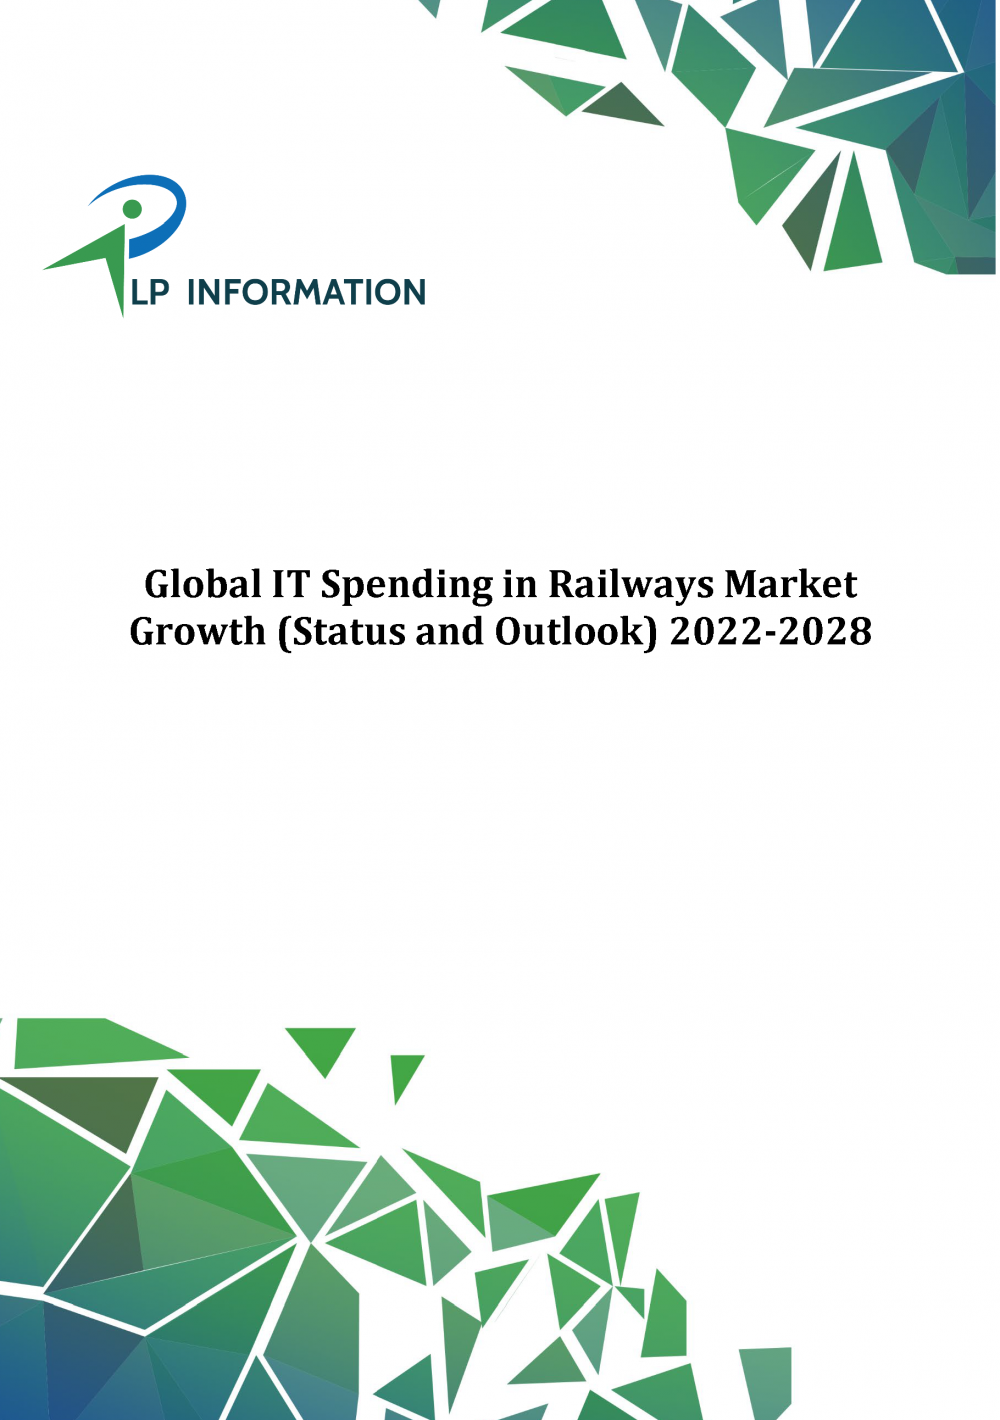 Global IT Spending in Railways Market Growth 2022-2028